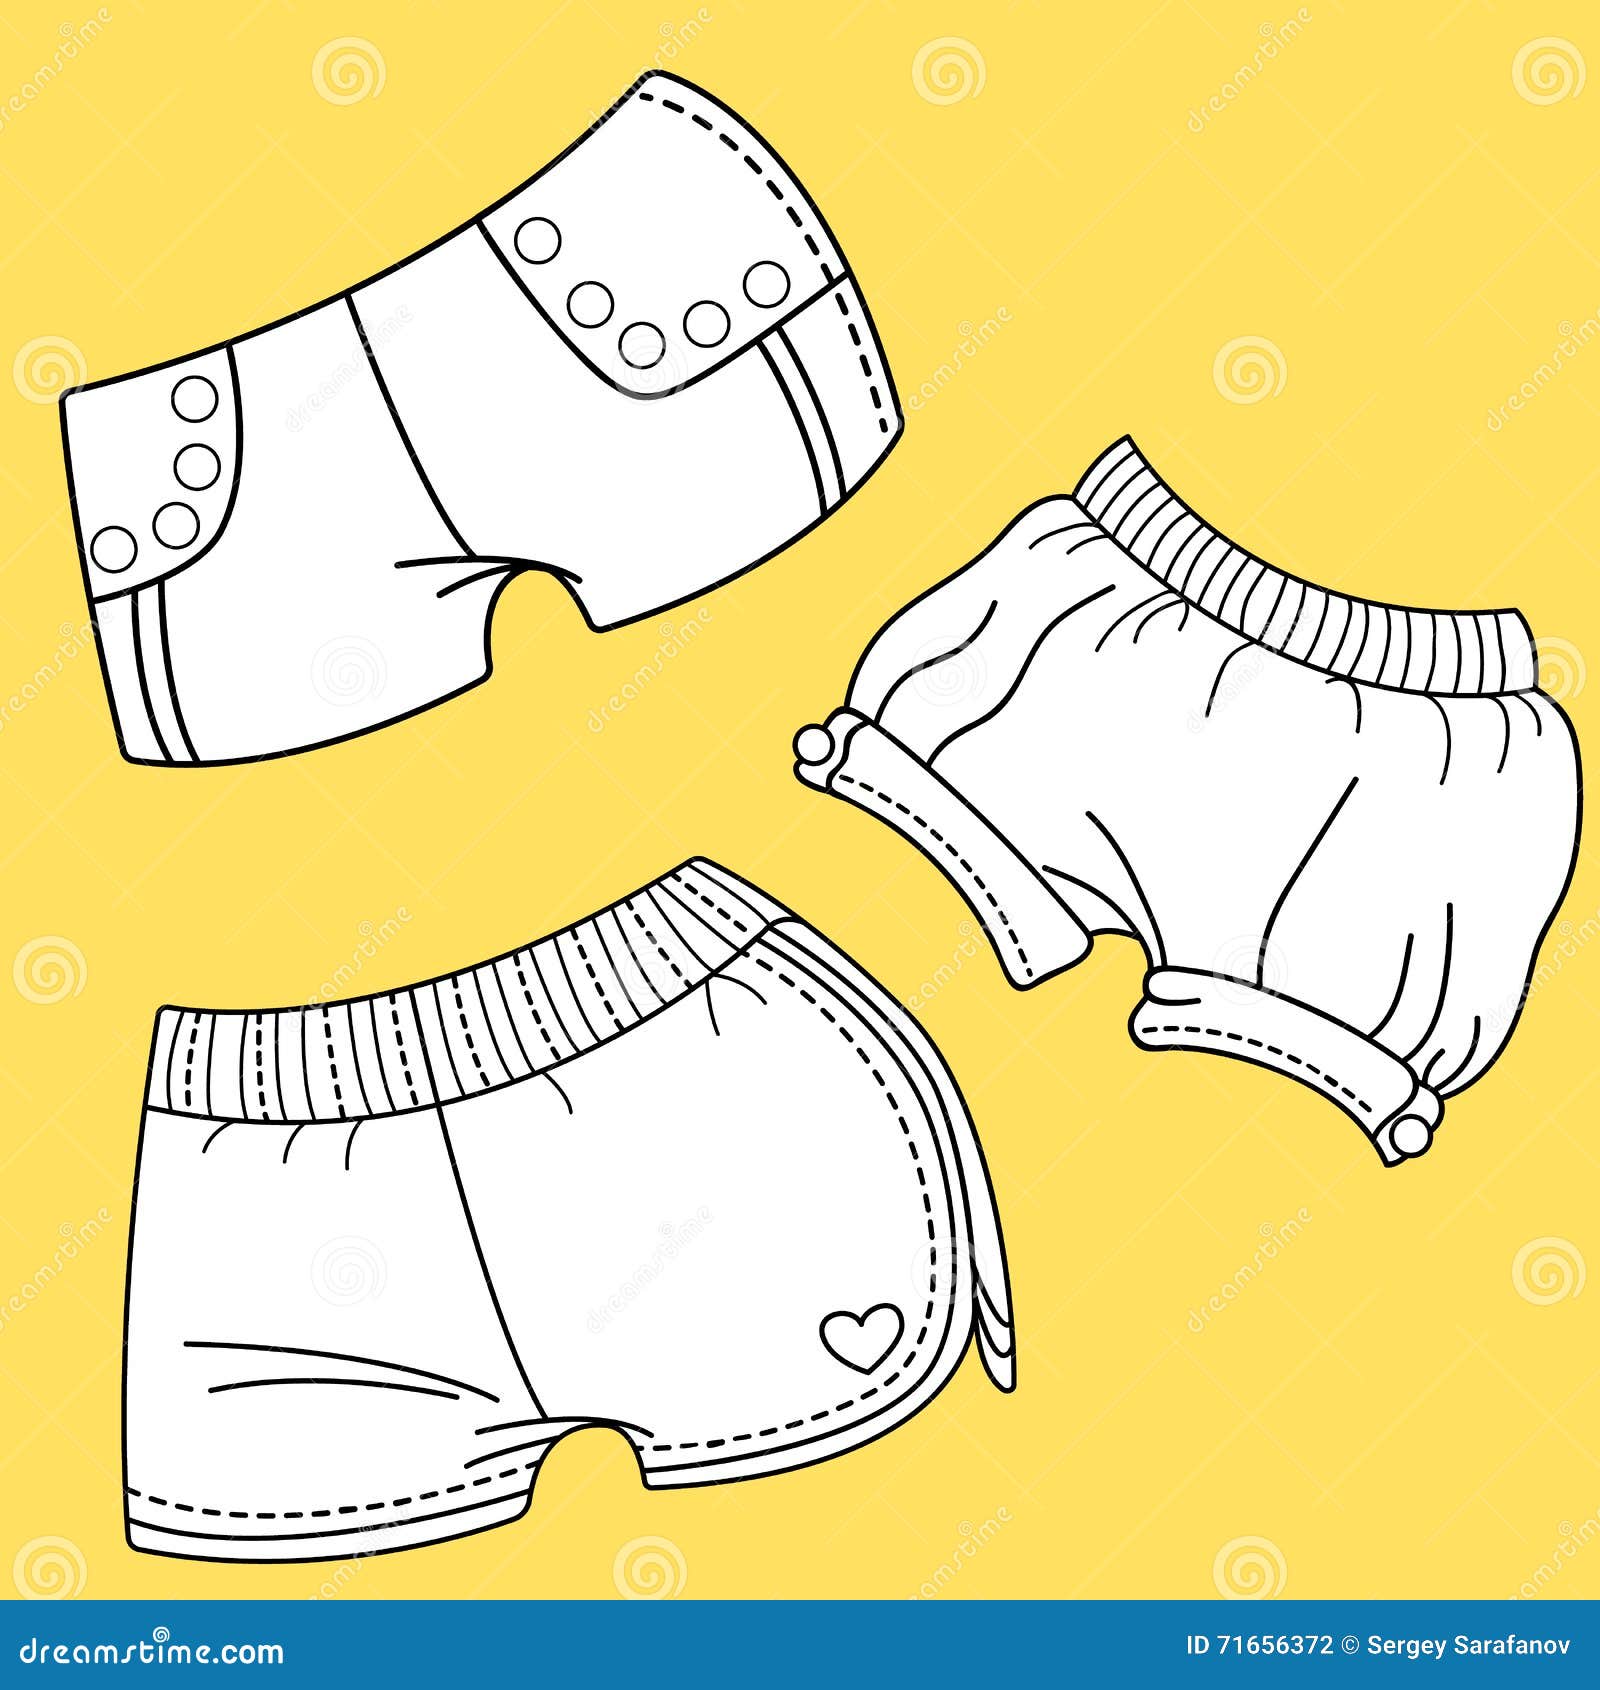 women-shorts-women-dress-design-fashion-flat-templates-sketches-creative-71656372.jpg